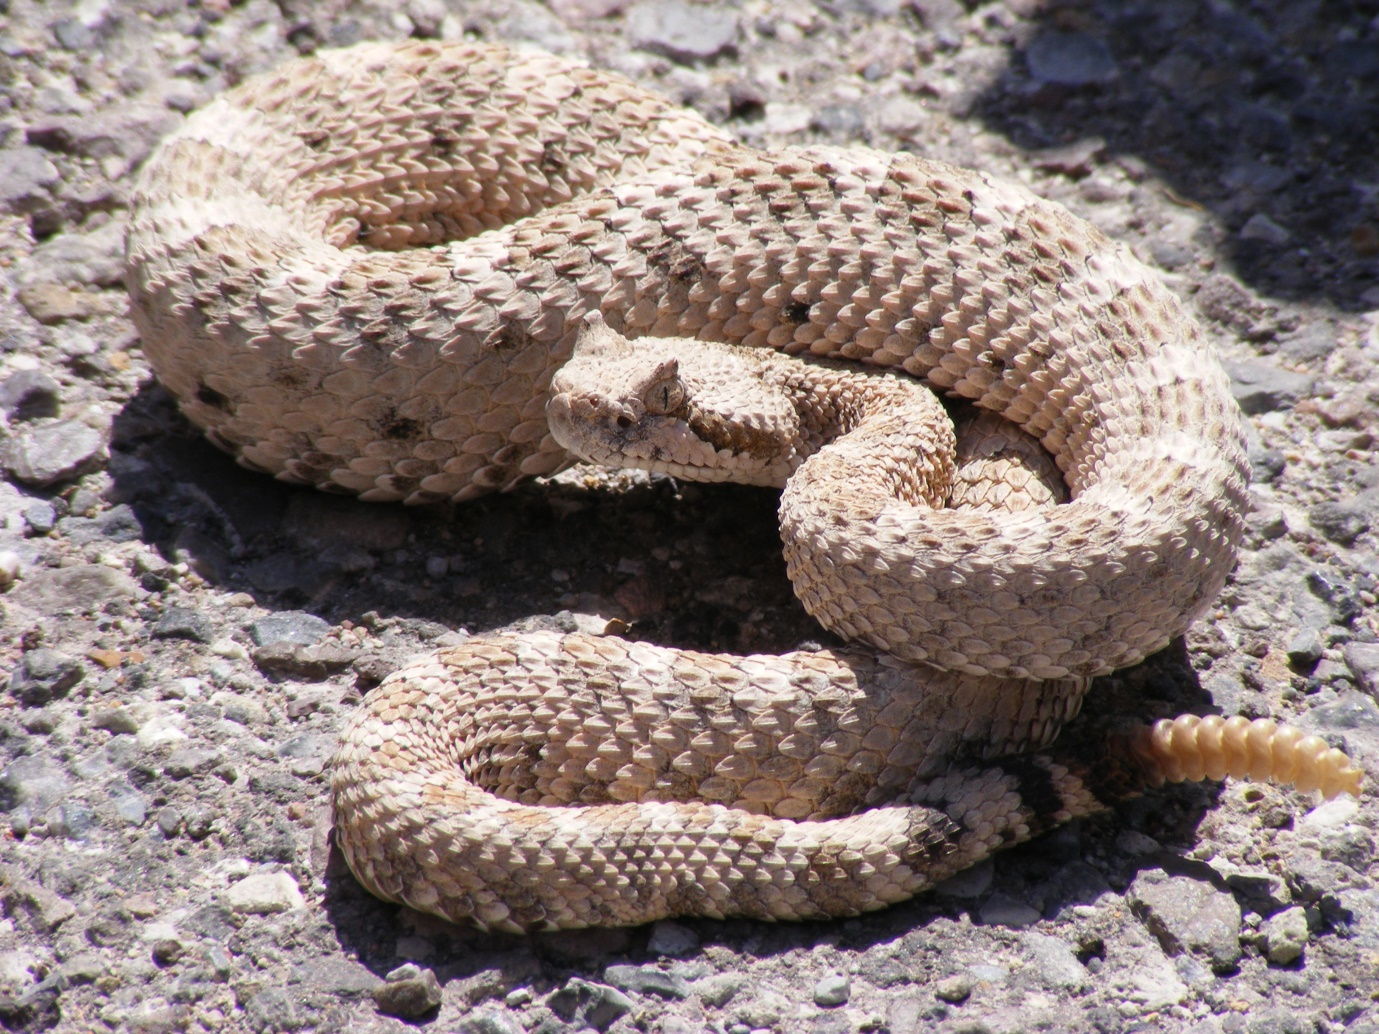 Rattlesnake giving mating calls